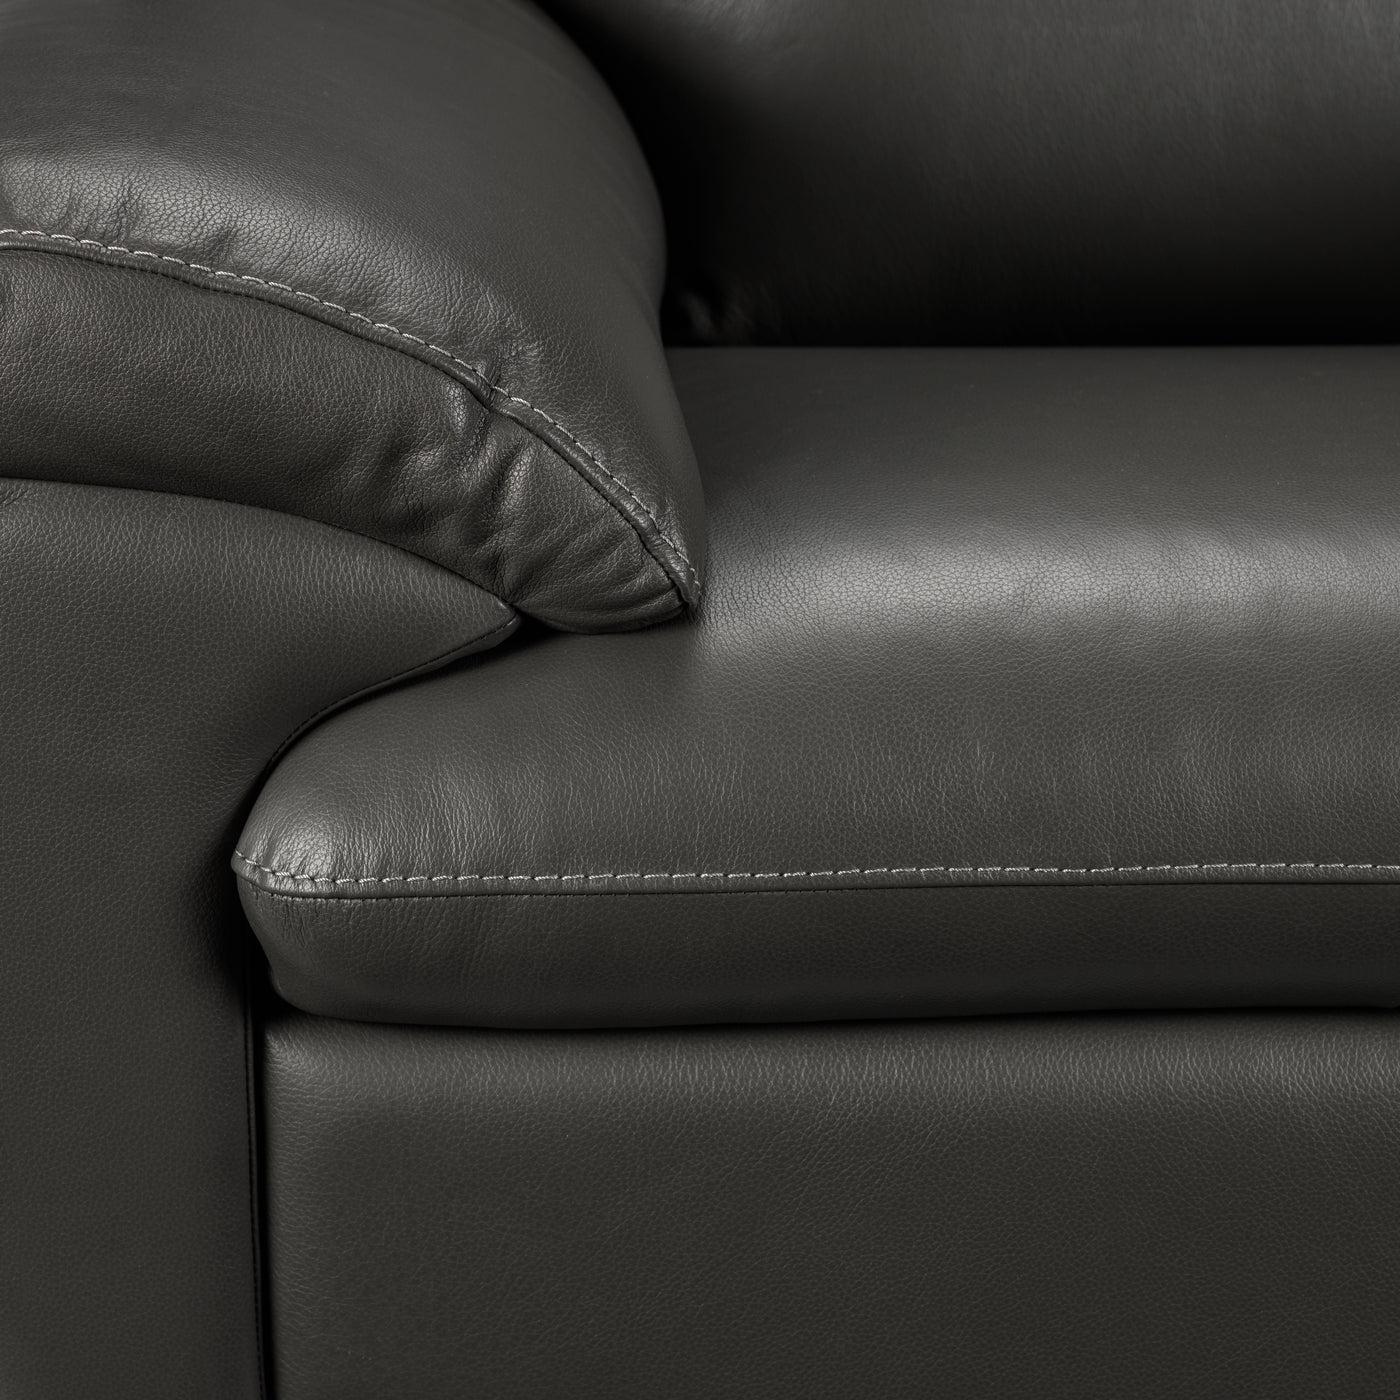 Leonardo Leather Sofa and Chair Set - Grey